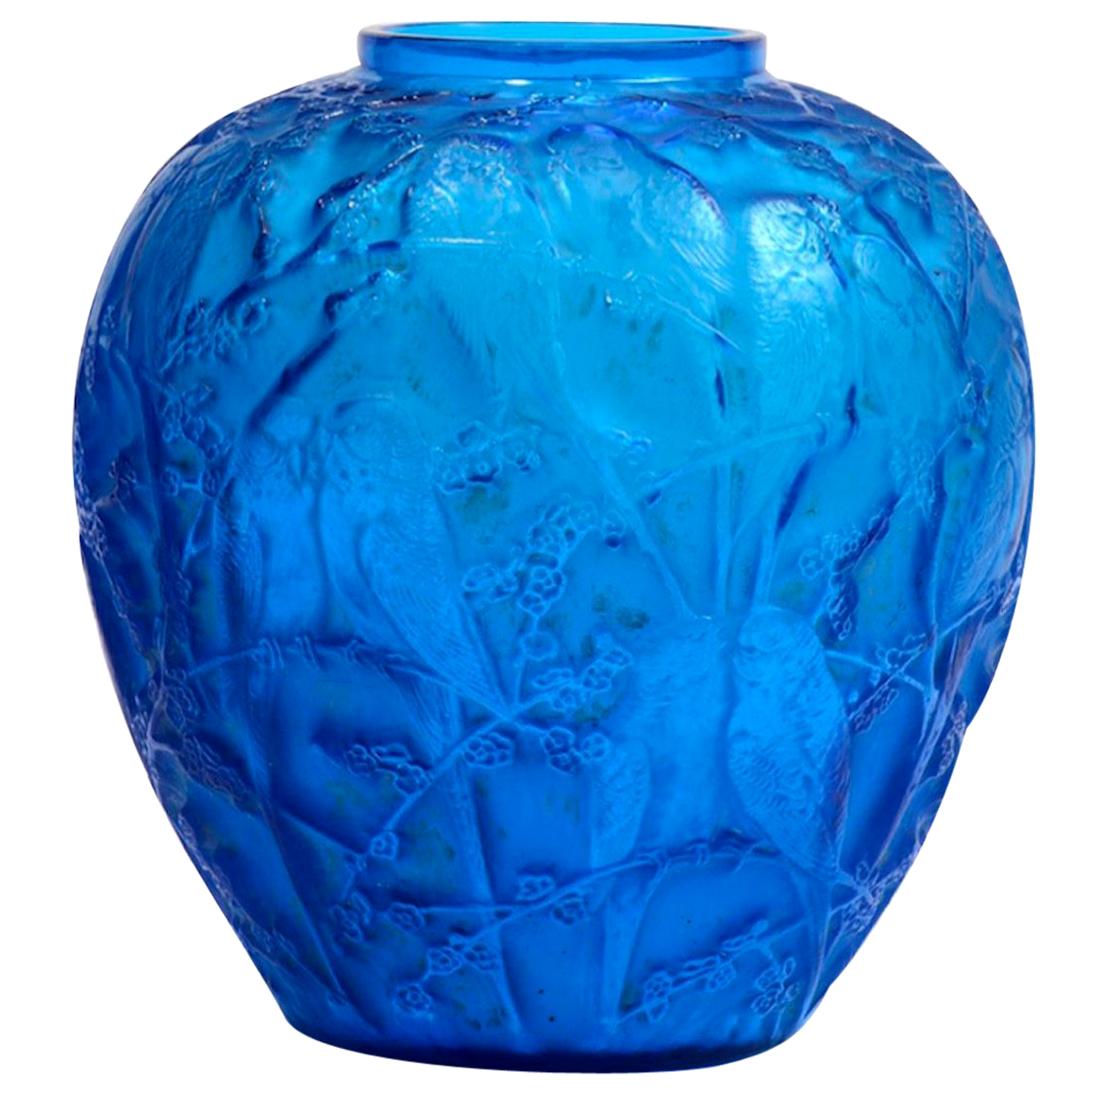 Rene Lalique Electric Blue Vase "Perruches"